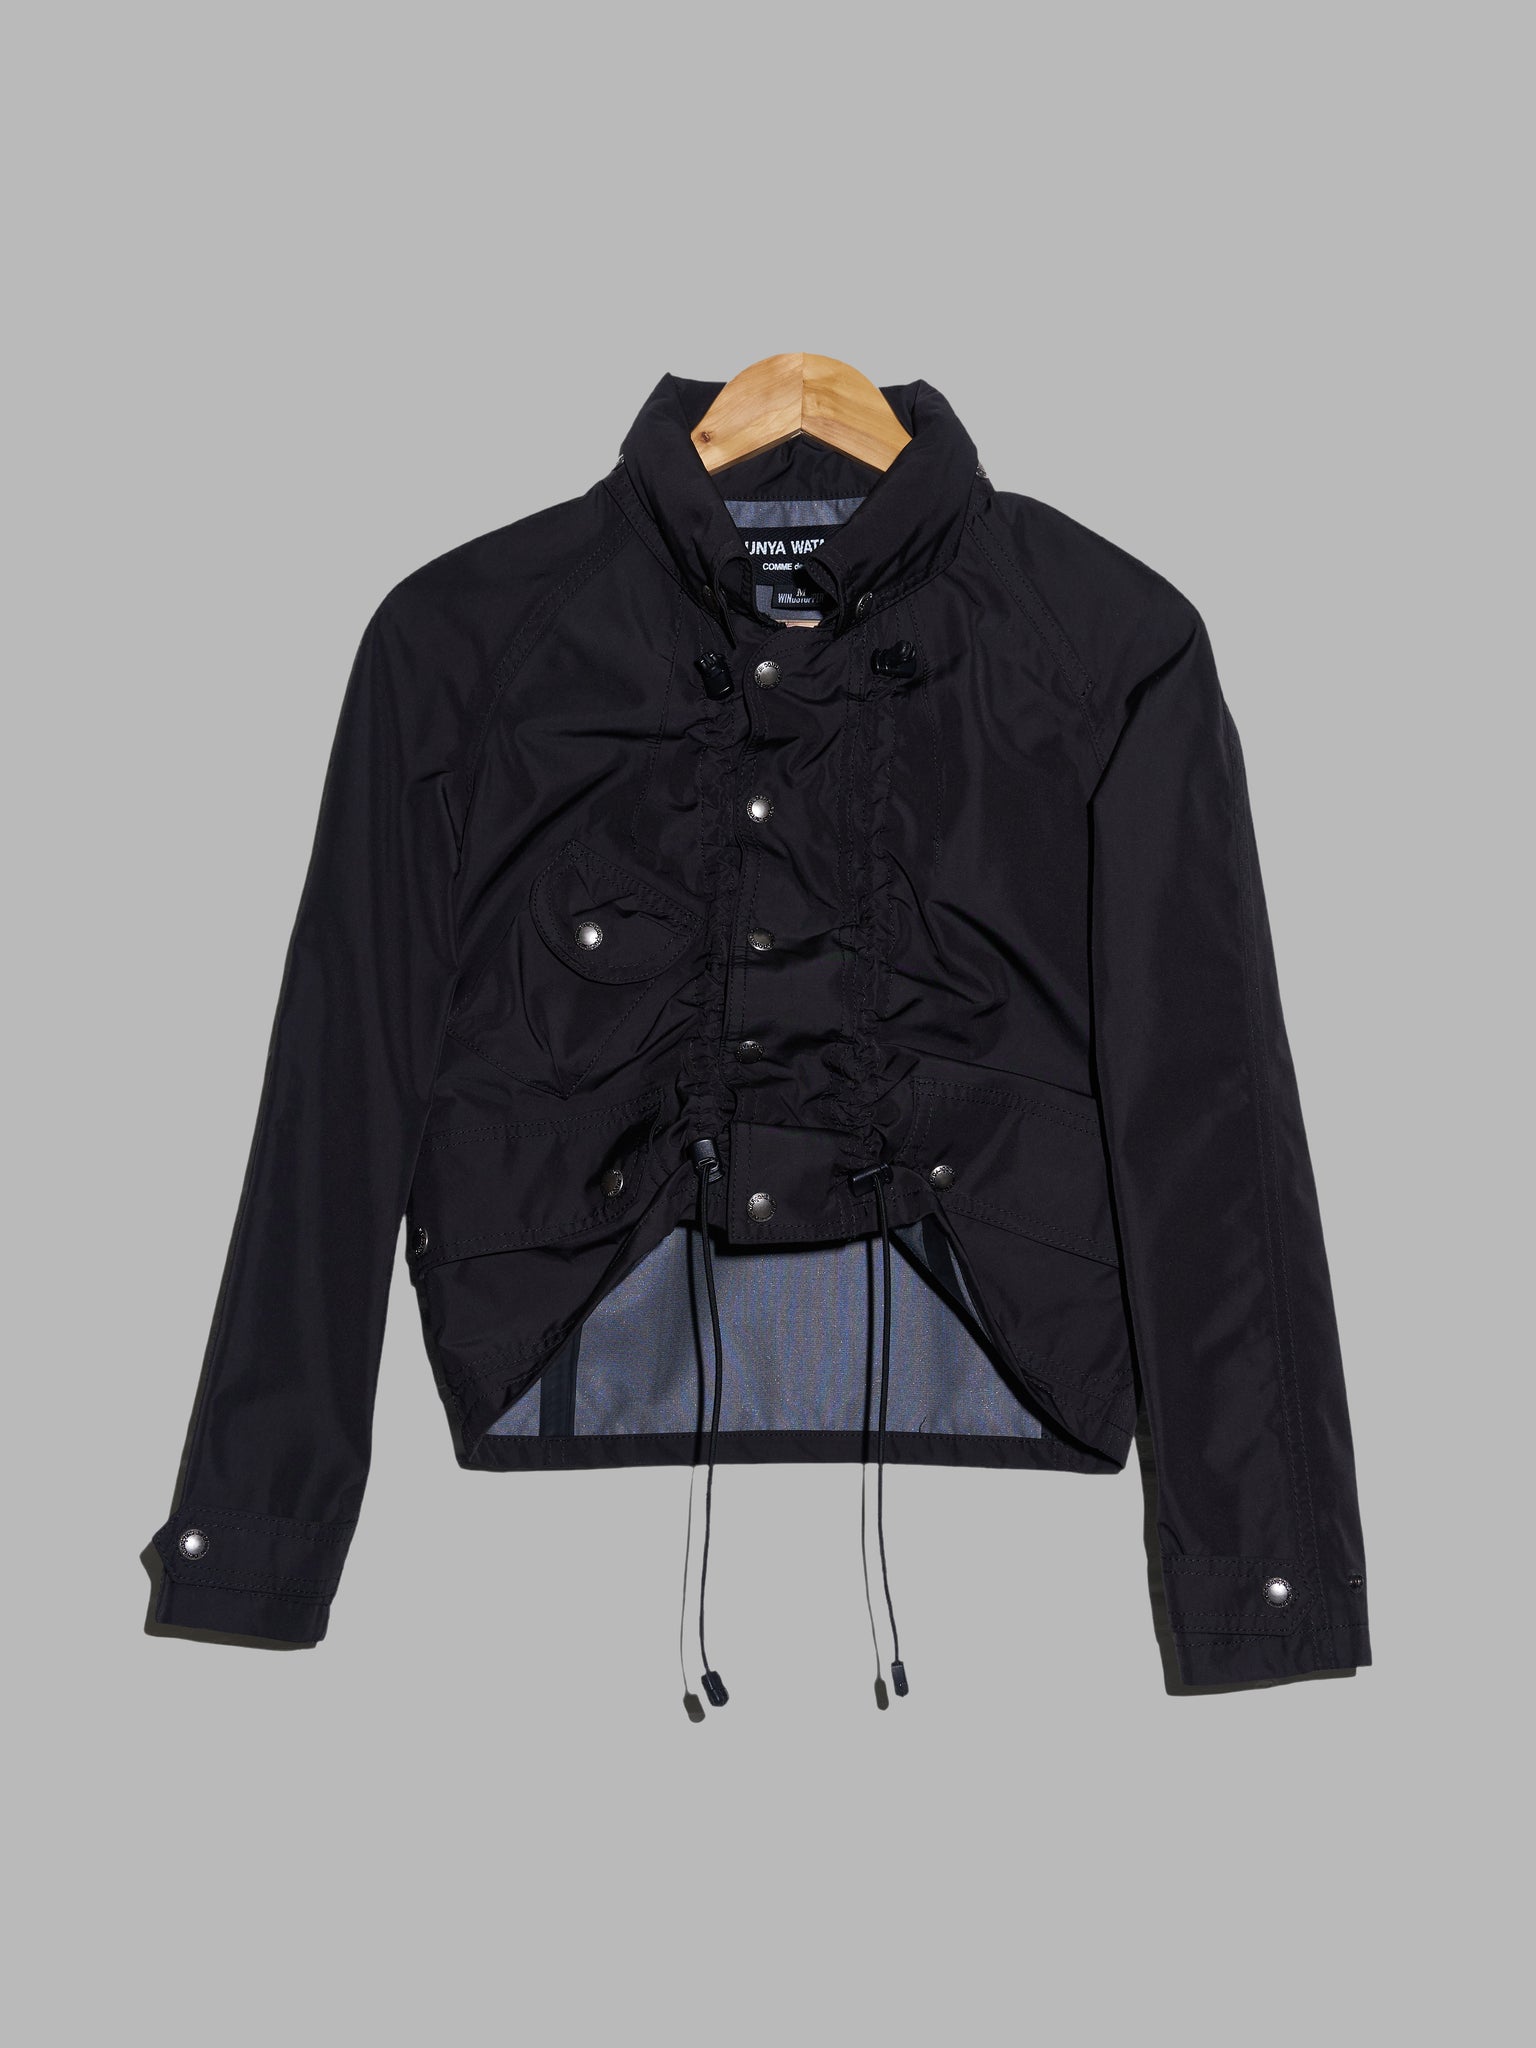 Junya Watanabe AW2005 black GORE-TEX drawstring jacket and skirt set - S M